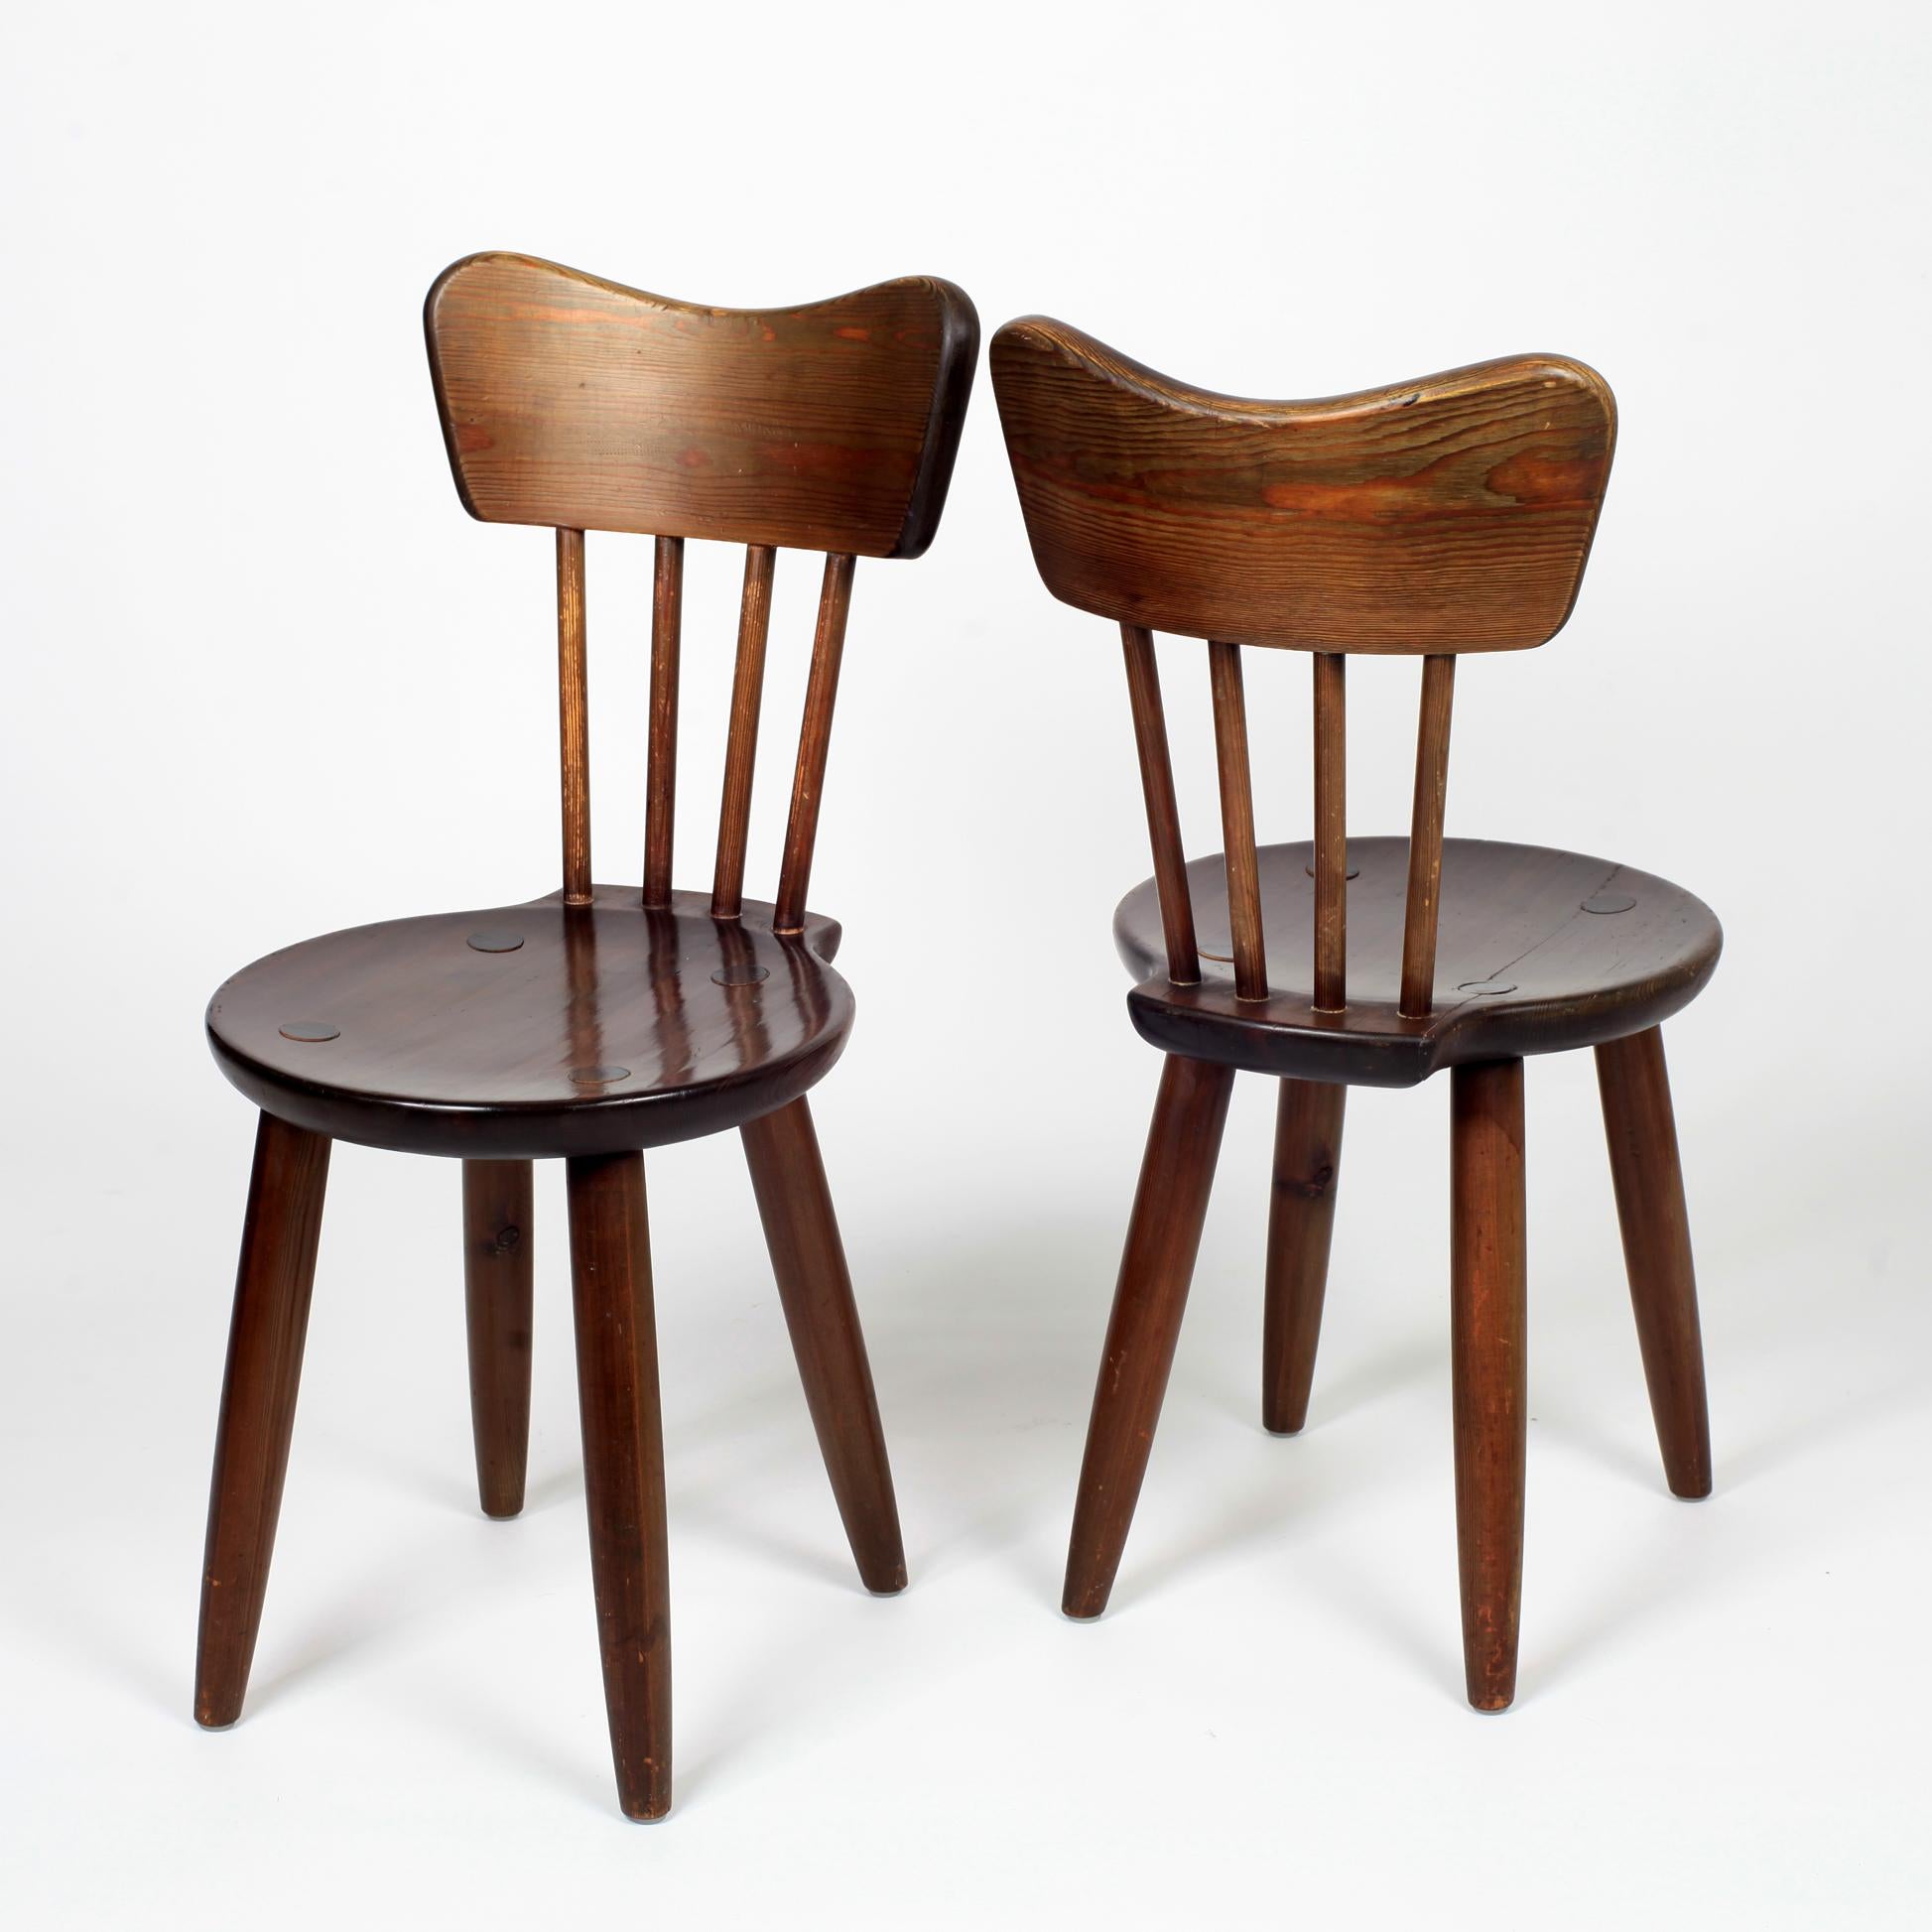 Set of 2 Brutalist stained pine wood dining chairs by Torsten Claeson for Steneby Hemslöjdsförening, 1930, Sweden.
Nice patina.